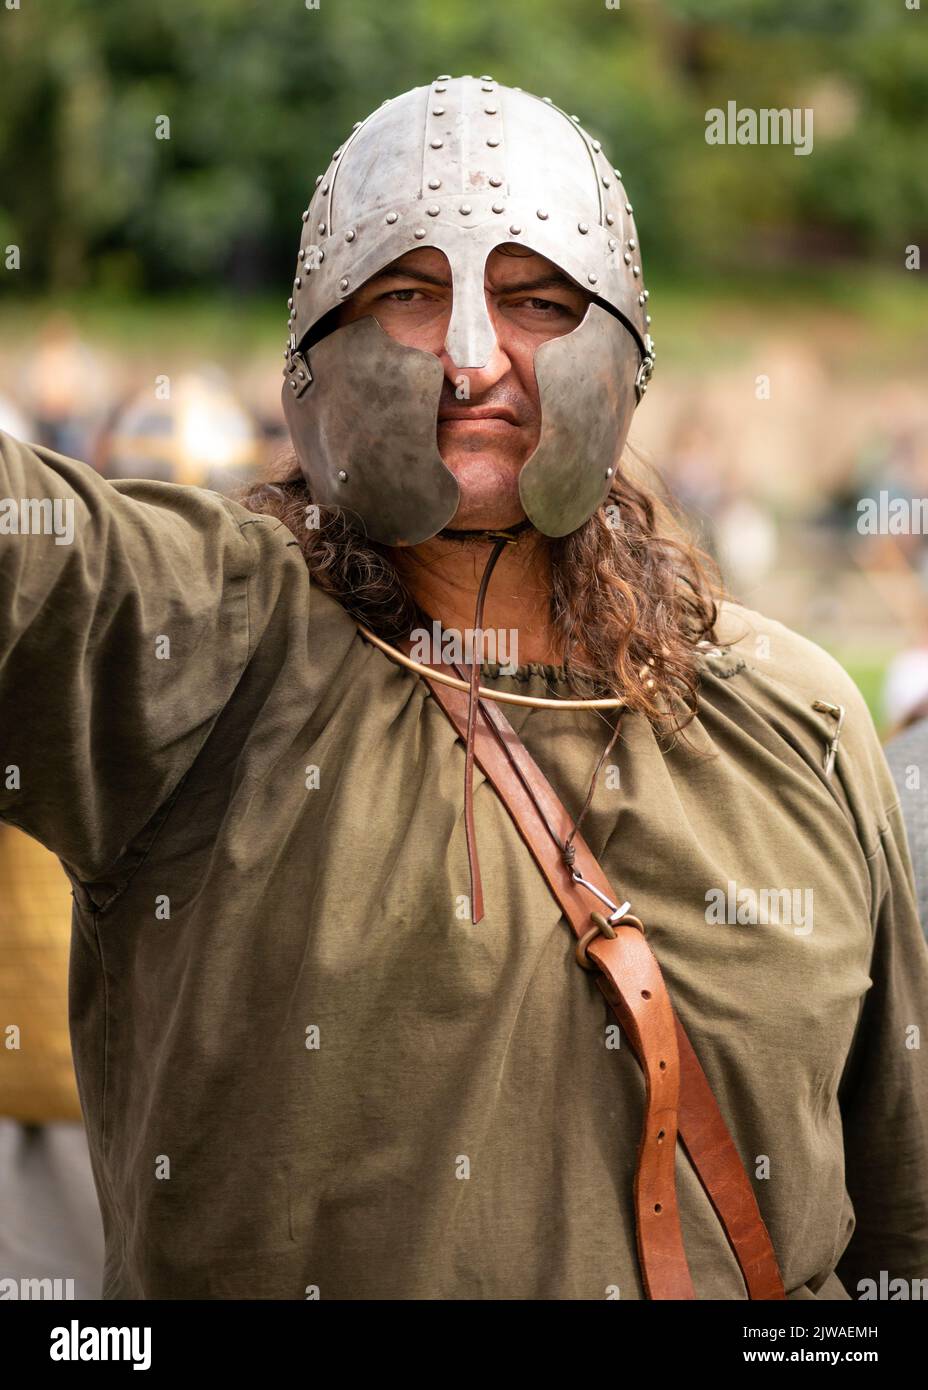 Der römische Krieger-Reenactor nimmt am Kulturfestival „Serdica is my Rome“ in Sofia, Bulgarien, Osteuropa, Balkan und der EU Teil Stockfoto